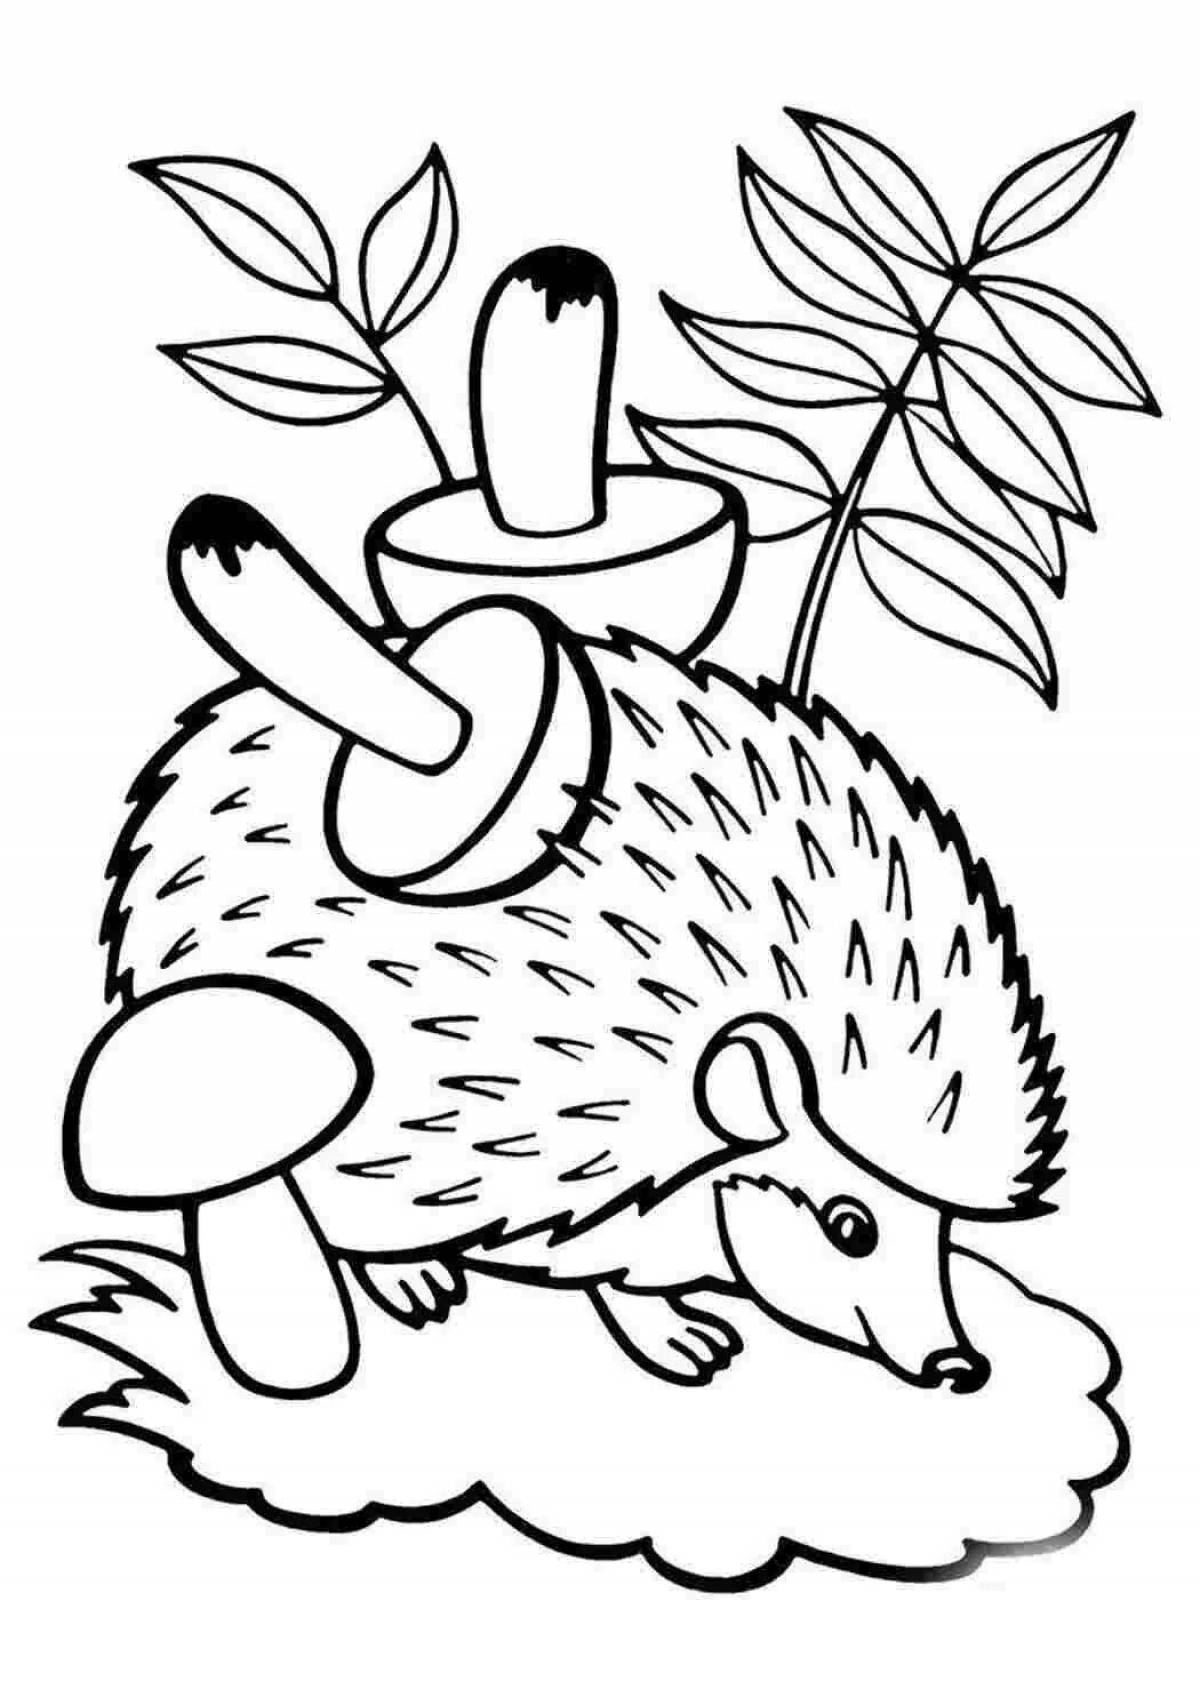 Coloring book funny hedgehog